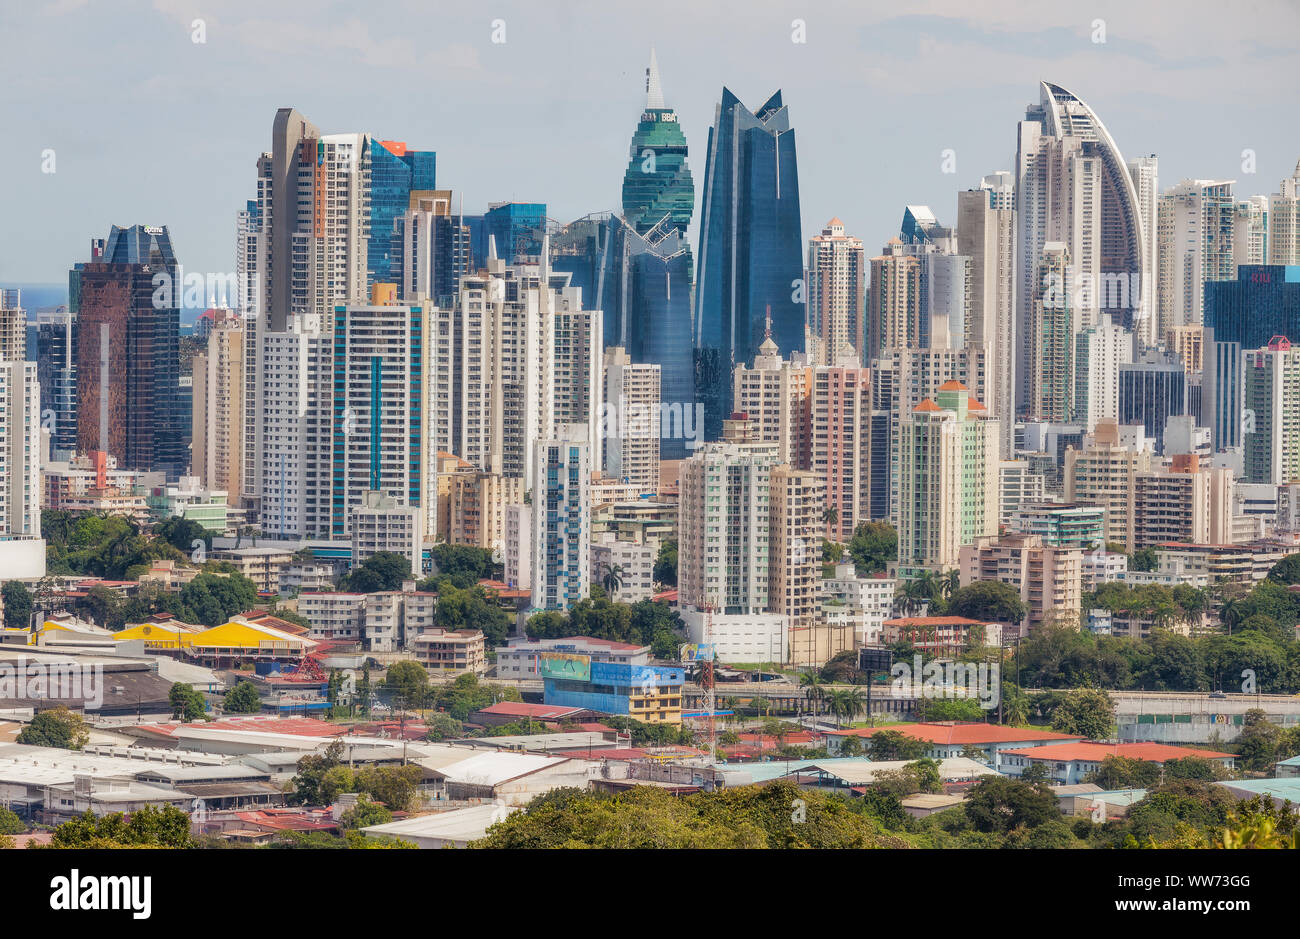 Panama City, Panama - November 10, 2016: The skyline of Panama City with its modern skyscrapers. Stock Photo